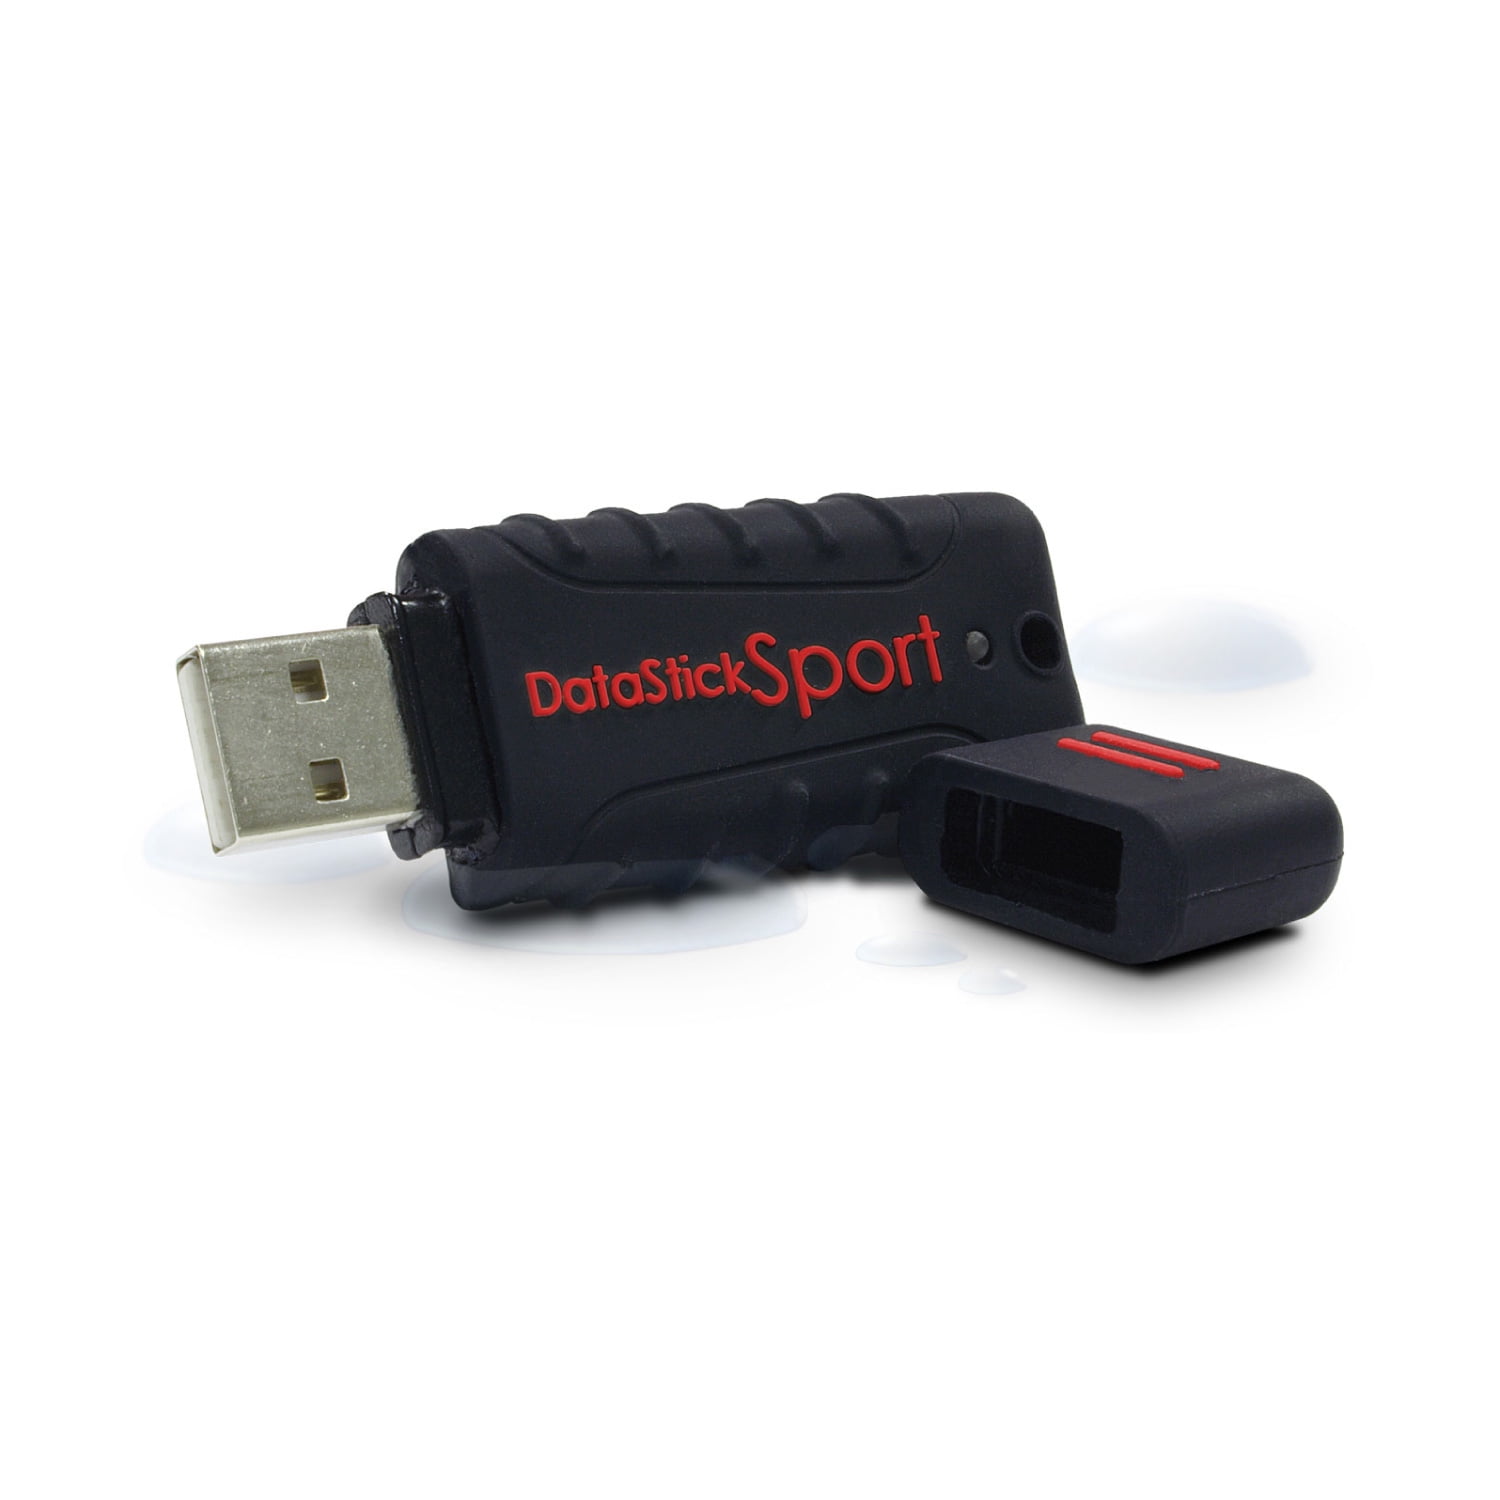 Centon Datastick Pro USB 3.0 (Black), 64GB - Walmart.com